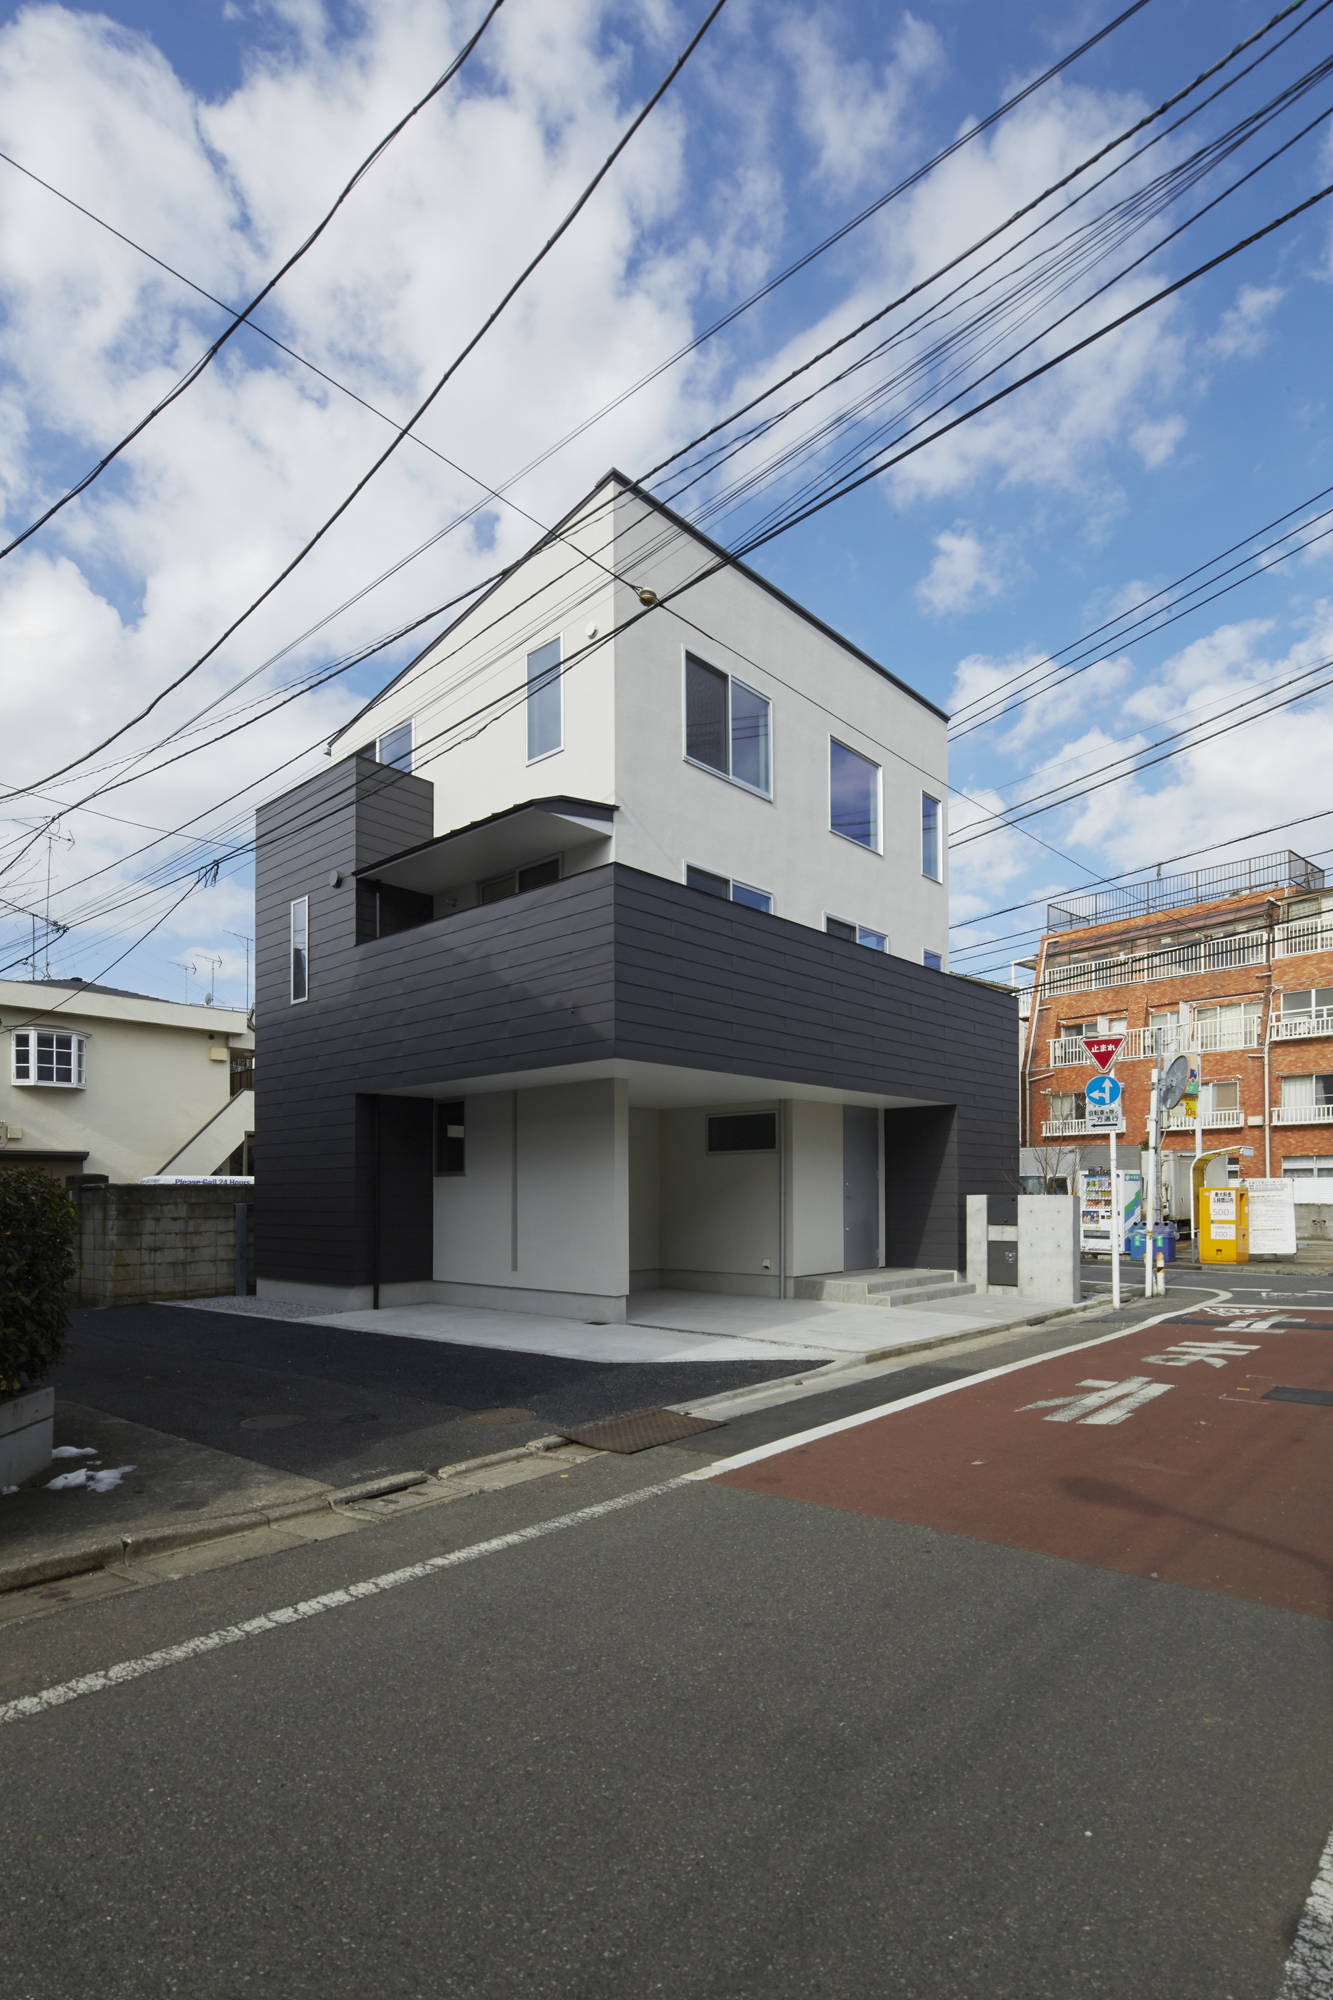 House in Kanamechou by Go Eto Architects & Associates